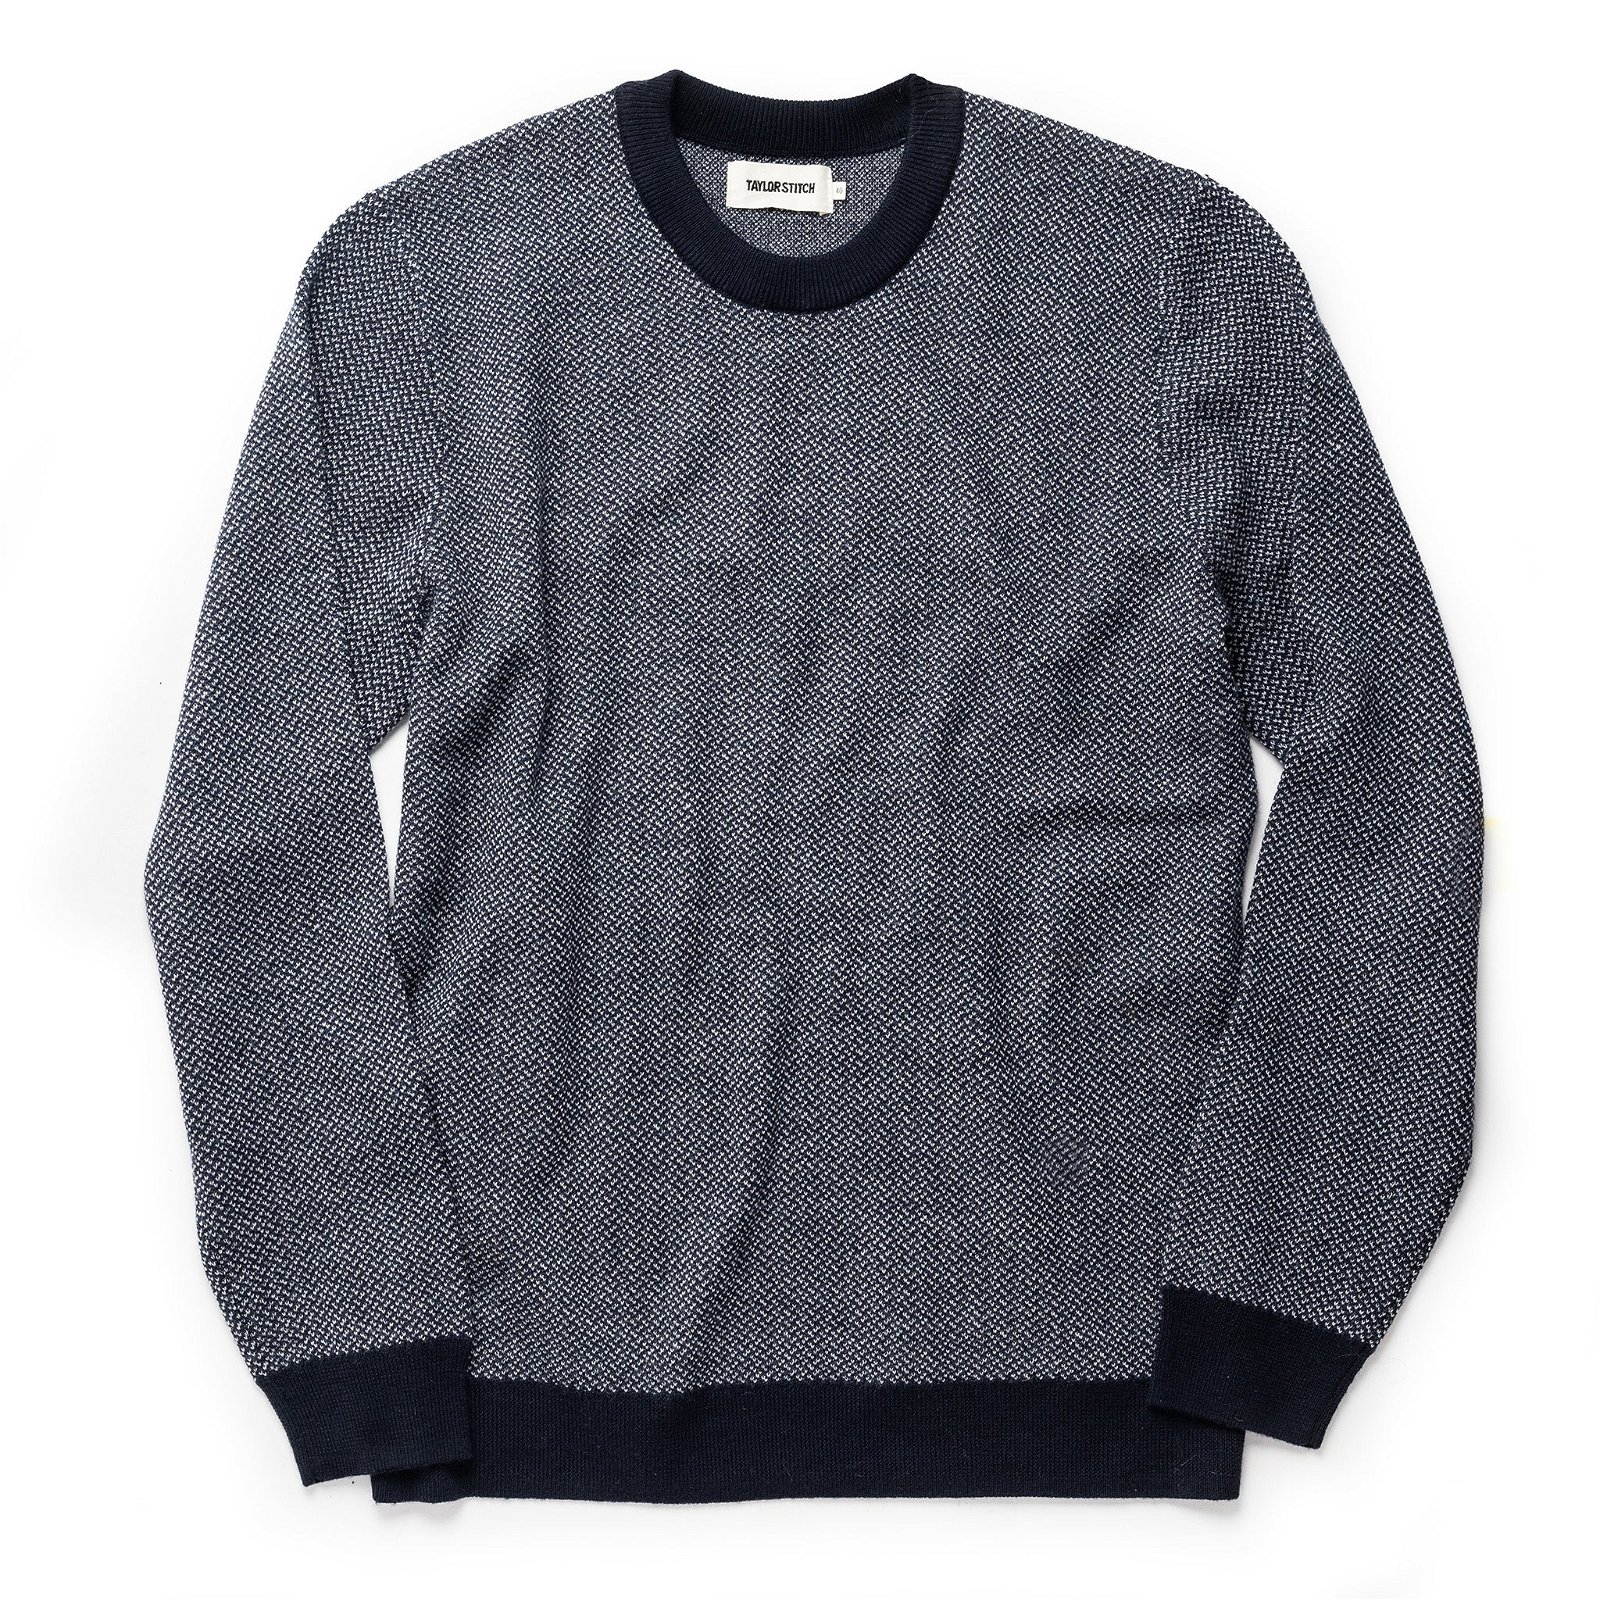 Image of The Everett Sweater in Navy Birdseye